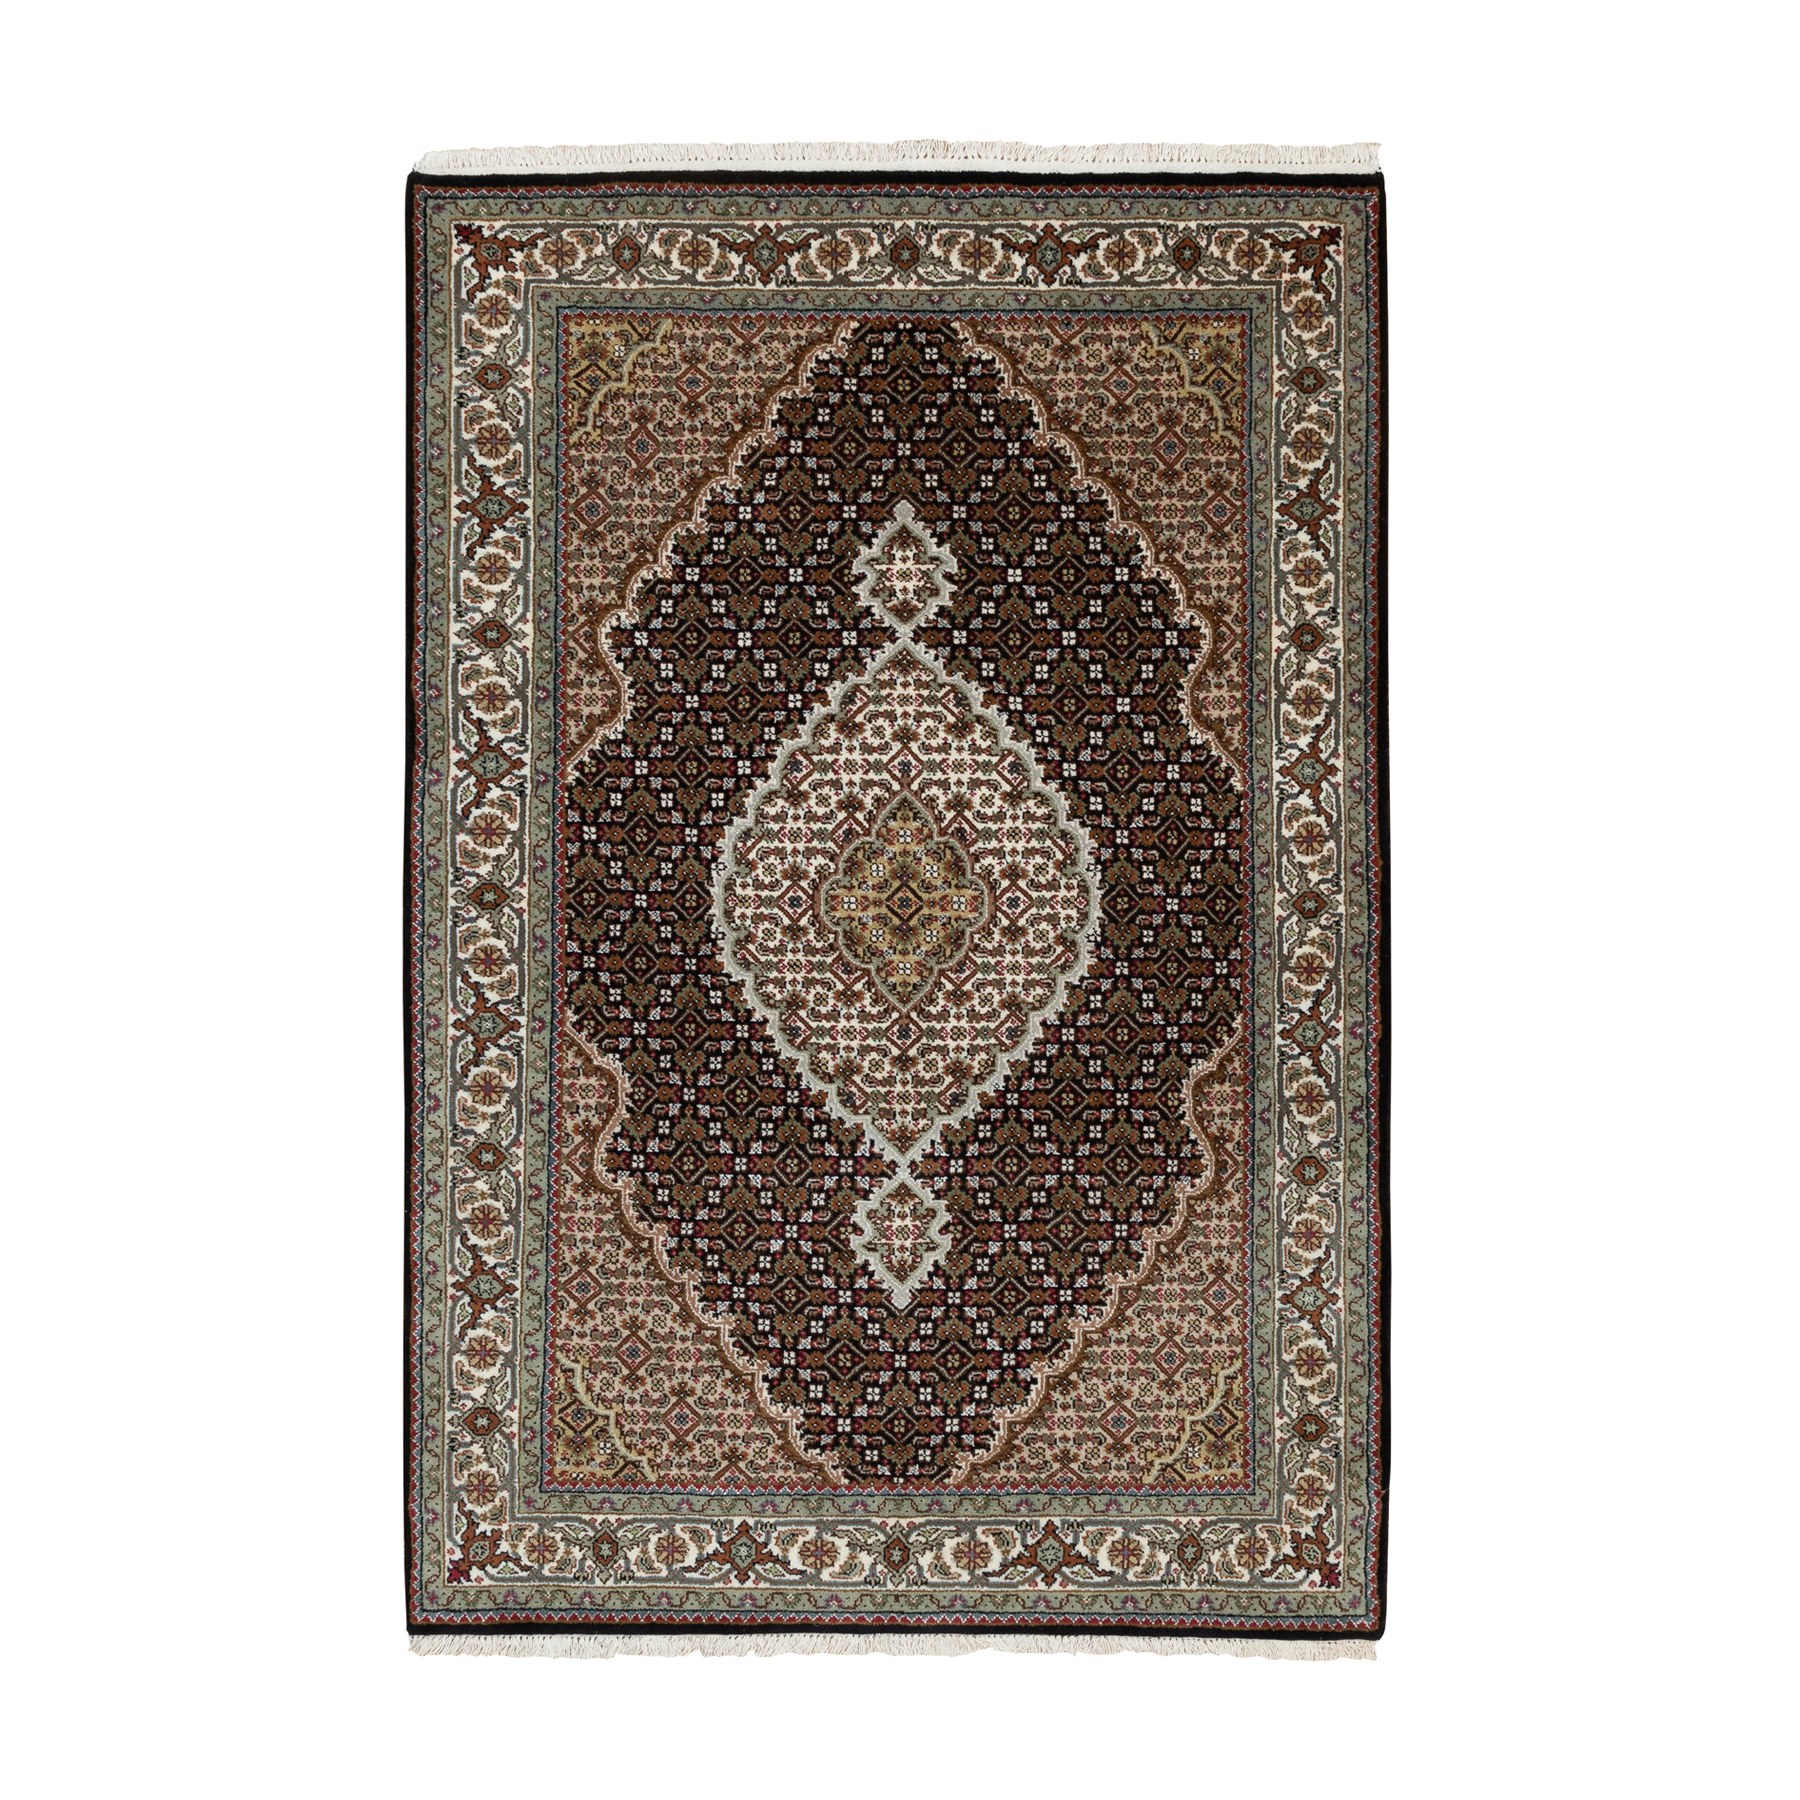 4'x6' Rich Black, Tabriz Mahi with Fish Medallion Design, 250 KPSI Wool and Silk Hand Woven, Oriental Rug 